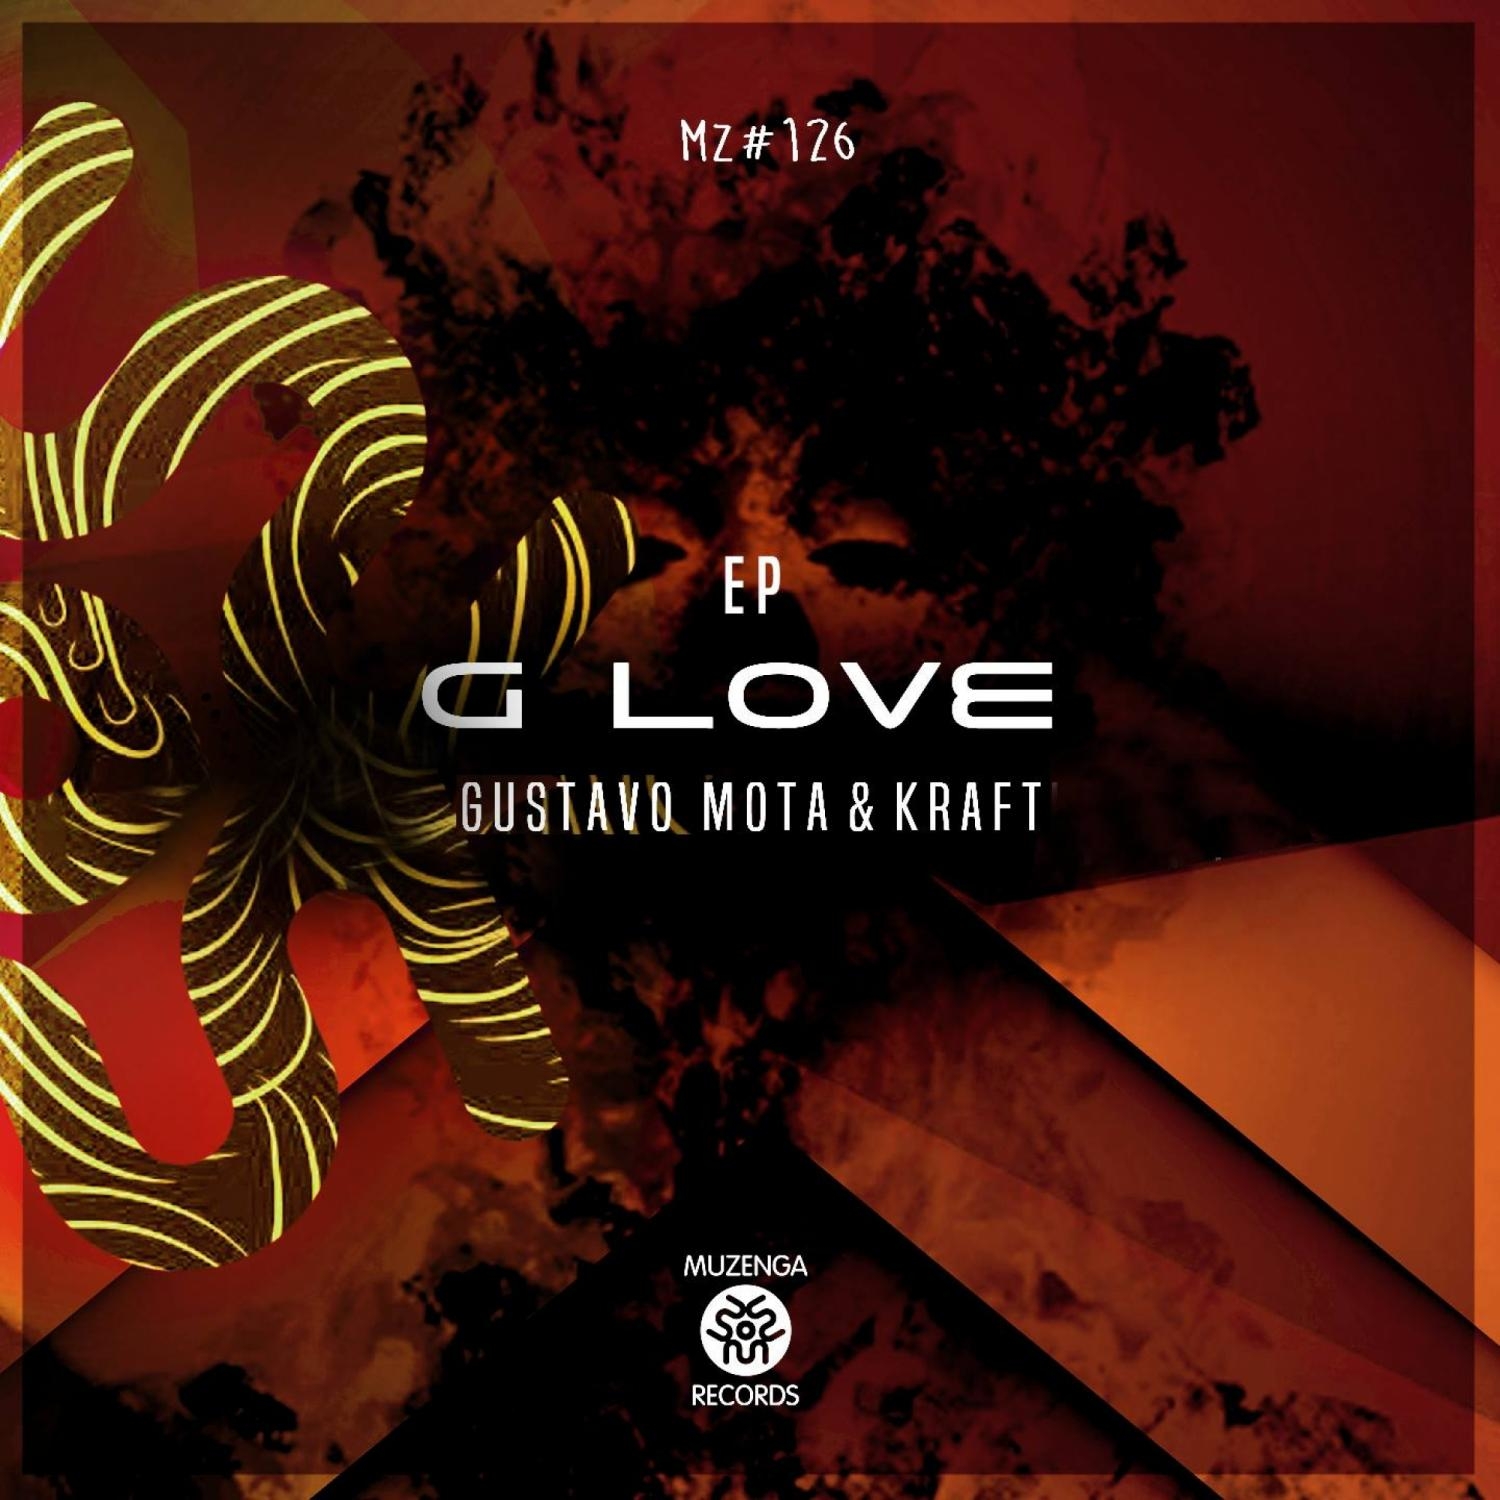 Gustavo Mota & Gustavo Koch - begin (Original Mix) Дата релиза. G Love. Dubdogz vs. Gustavo Mota, EVOXX - Special Vibe (Extended Mix). D+G Love. Step ahead feat hola vano